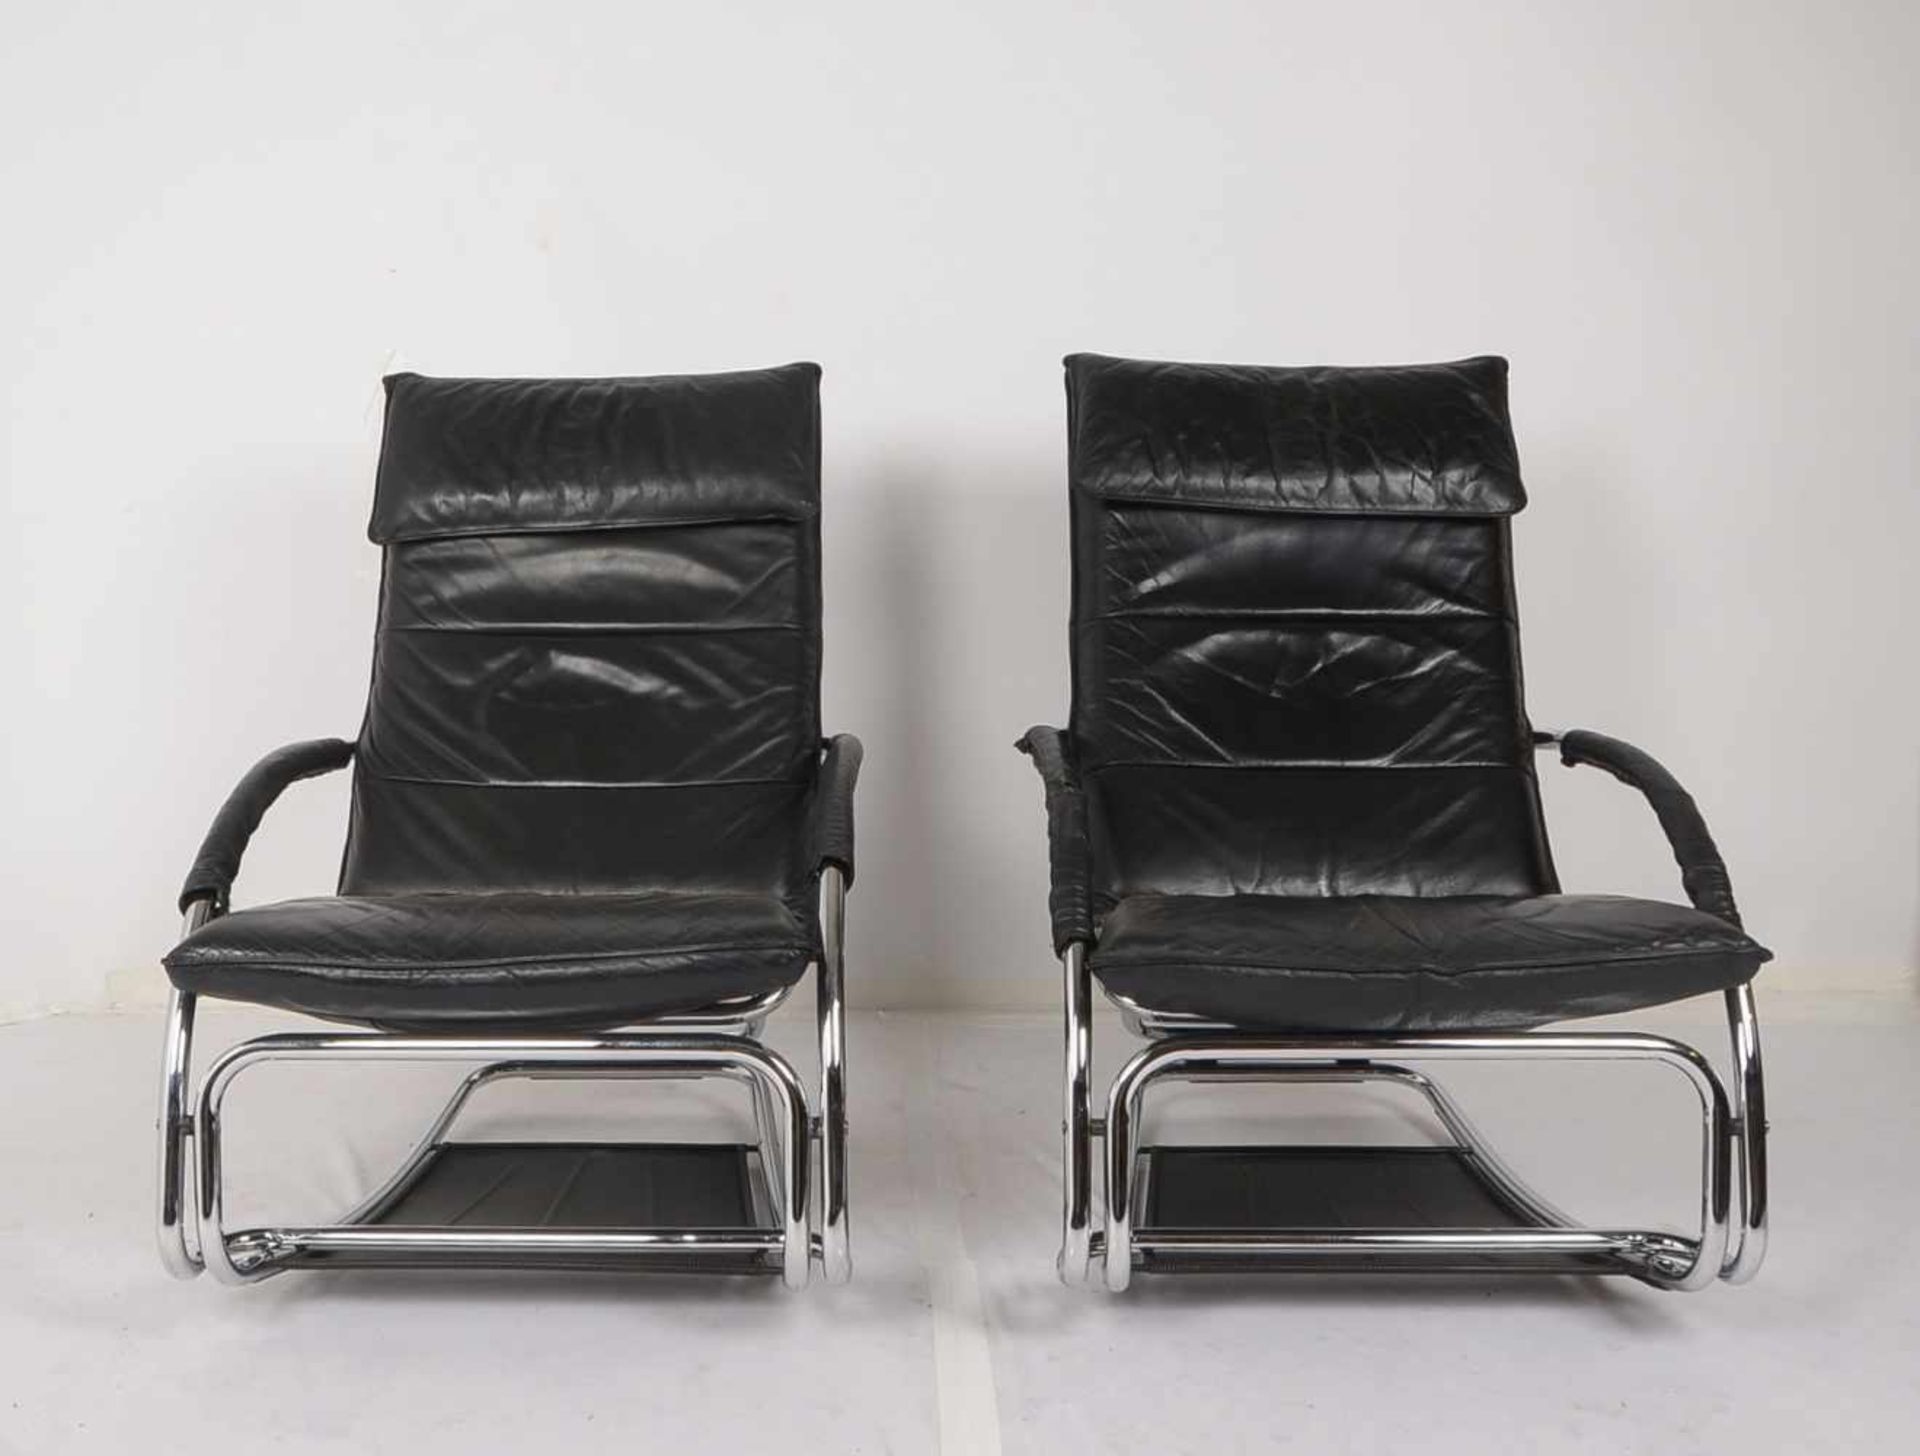 Bonaldo/Italy, 2 Loungesessel/Relaxsessel (Schaukelstuhl - zur Chaiselongue umfunktionierbar) ' - Bild 2 aus 3